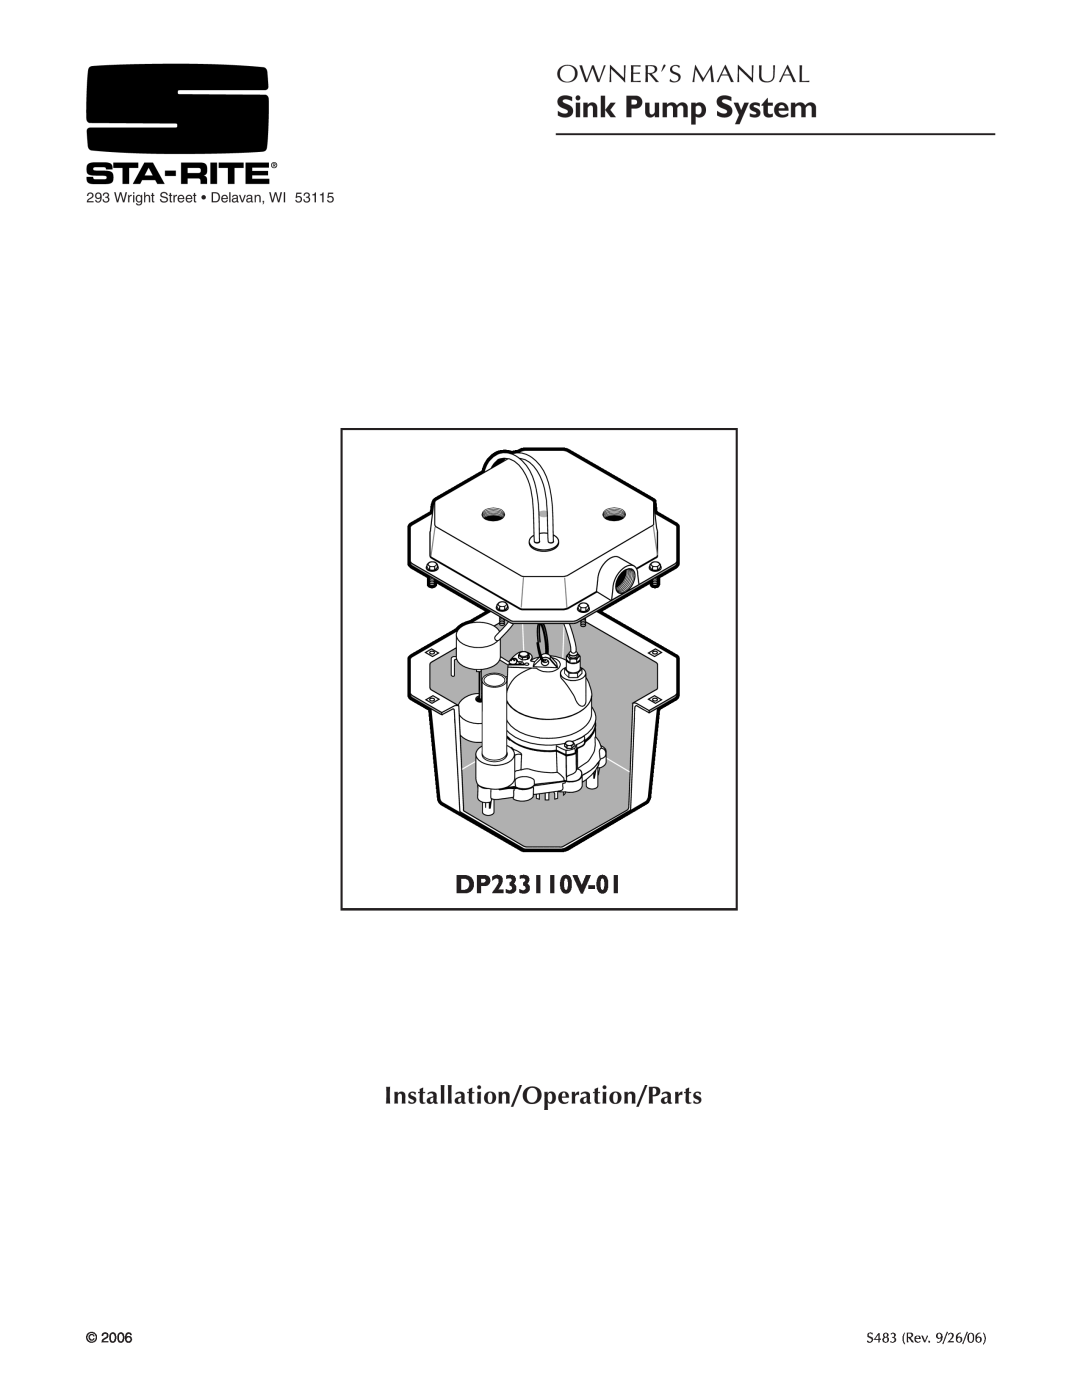 Pentair owner manual Sink Pump System, DP233110V-01, Installation/Operation/Parts, S483 Rev. 9/26/06, 4943 